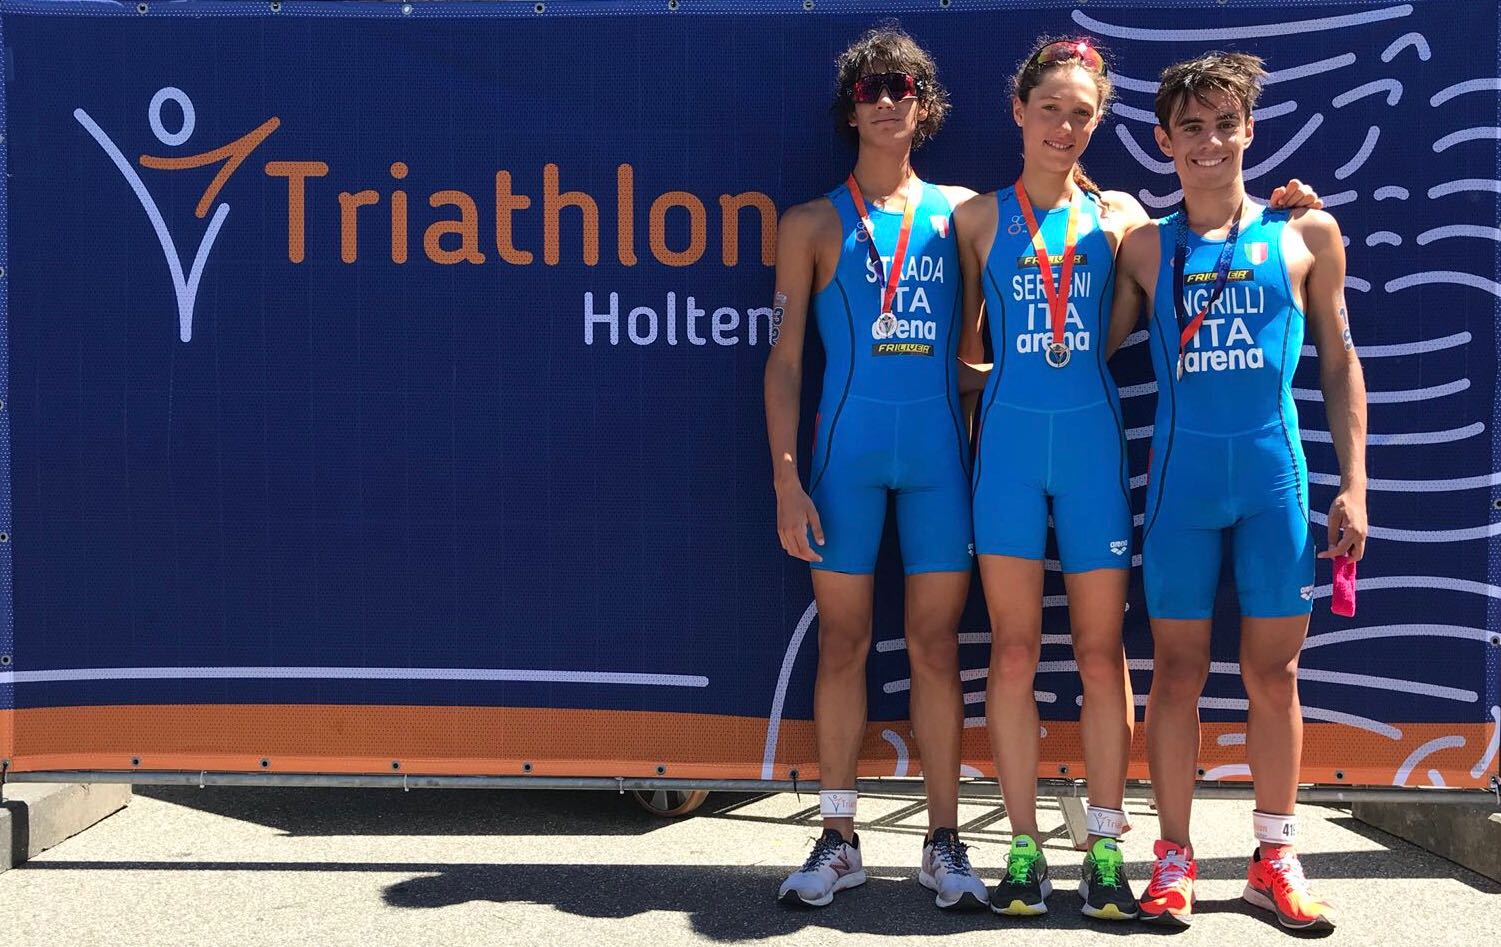 Holten ETU Triathlon Junior European Cup: 7° Strada, 13^ Ingrillì e Seregni  